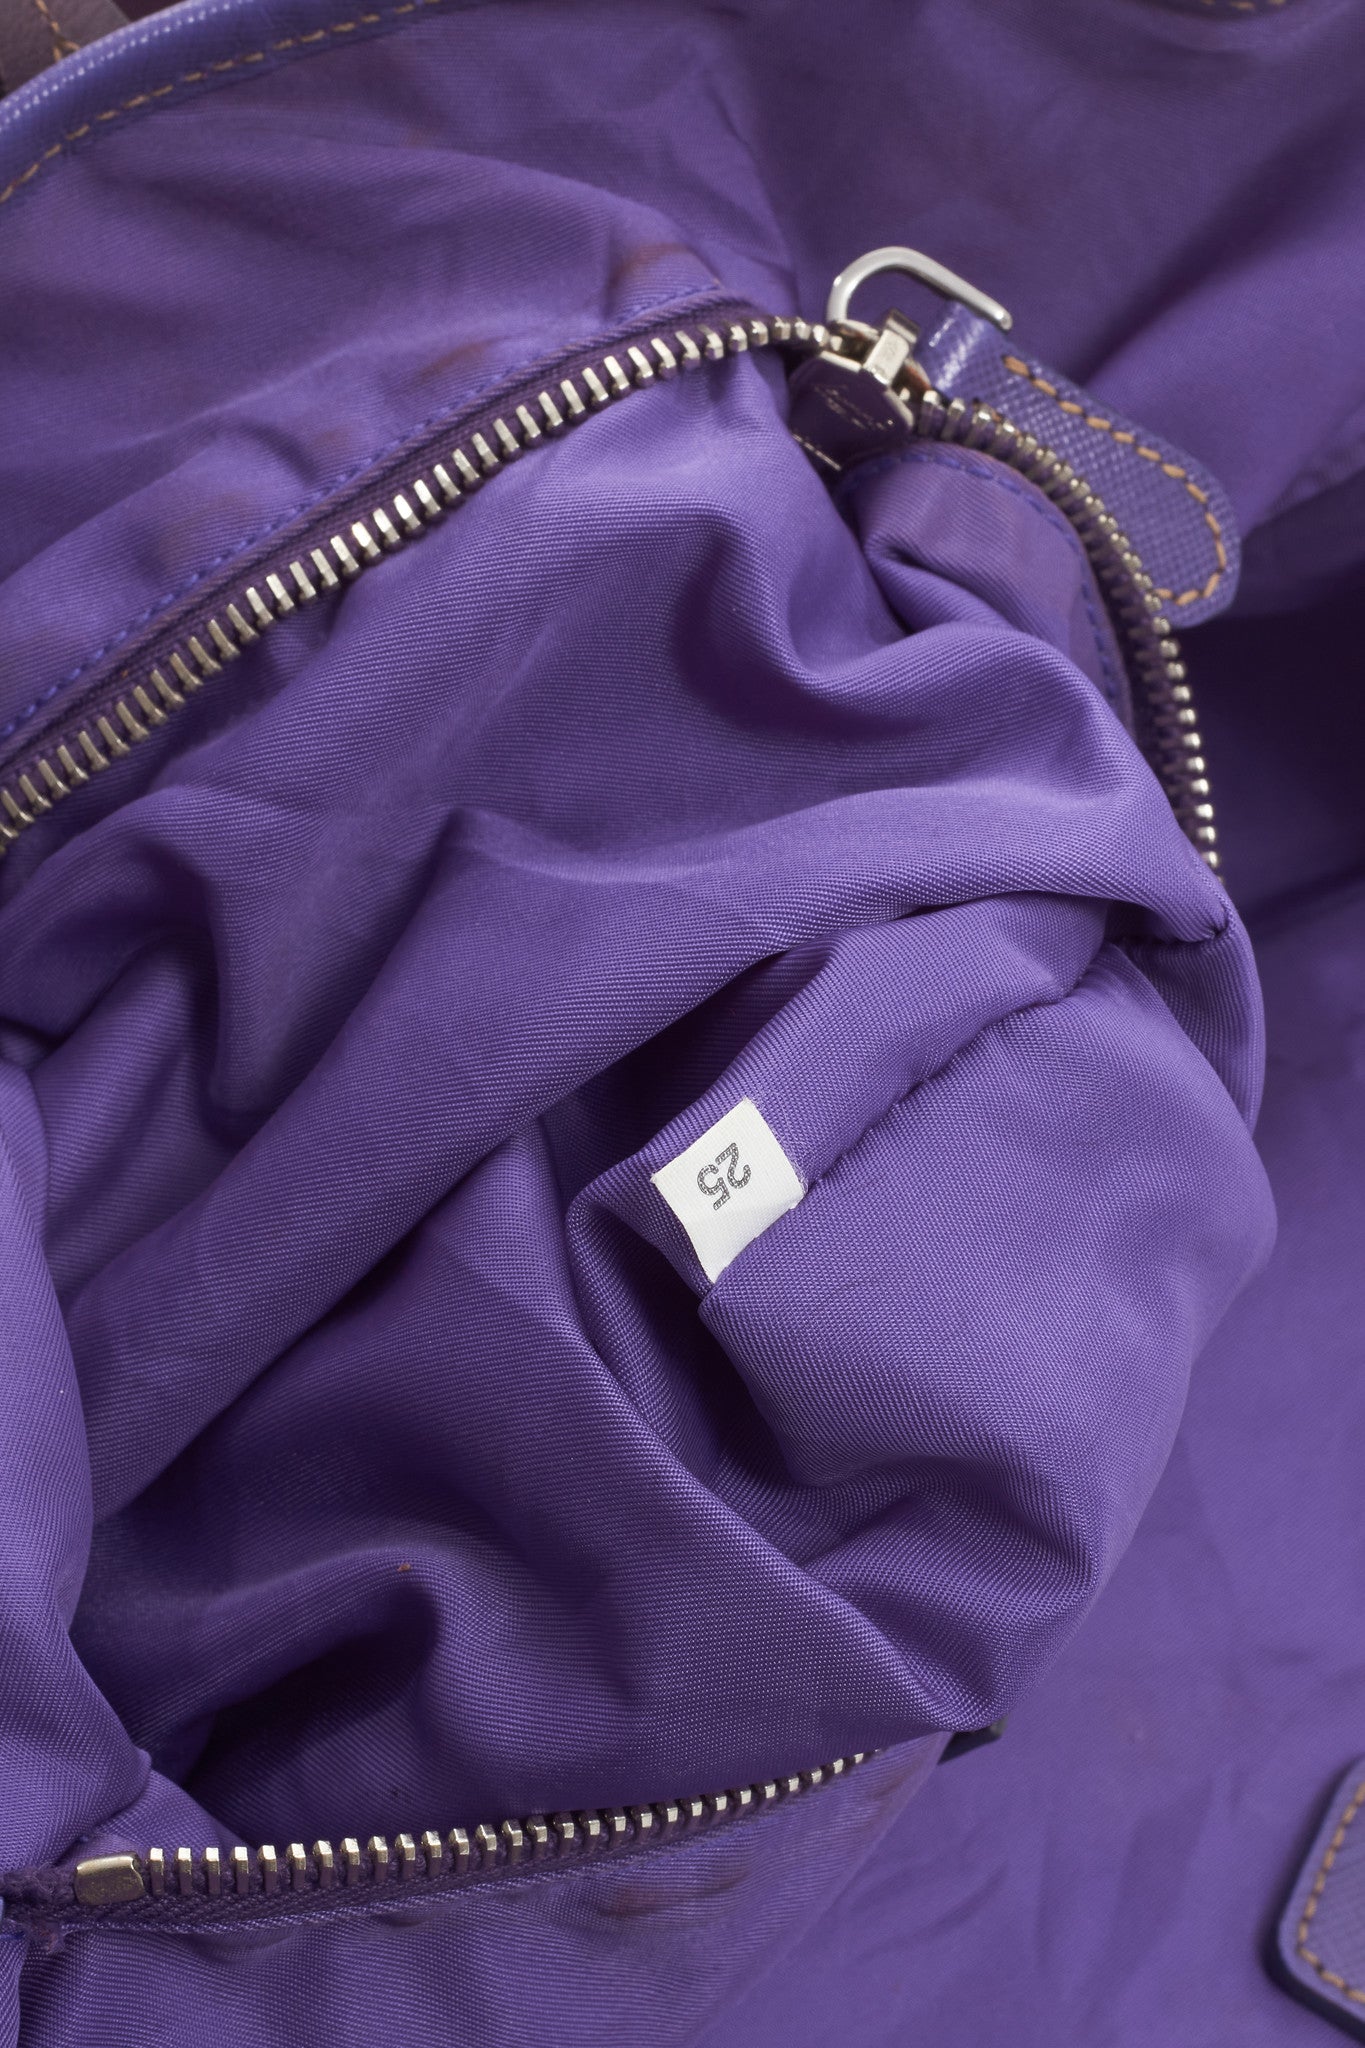 Prada Purple Nylon Medium Tote Bag